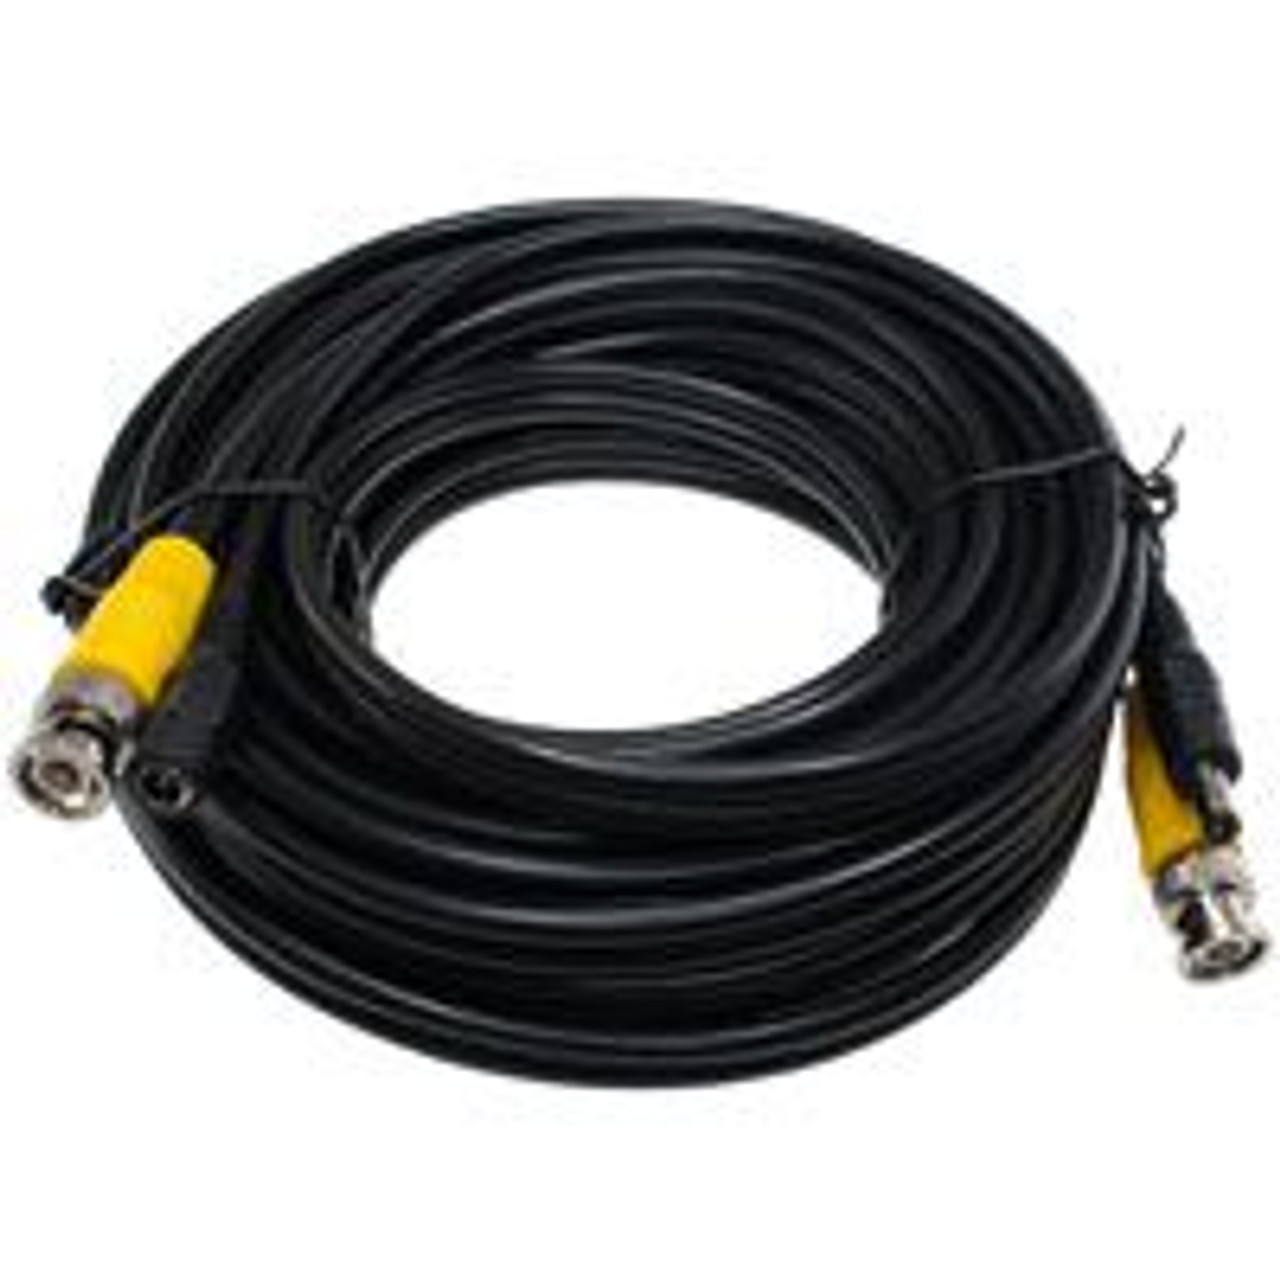 PolarisUSA 50 Ft. Video/Power Cable, 95% Braid, White